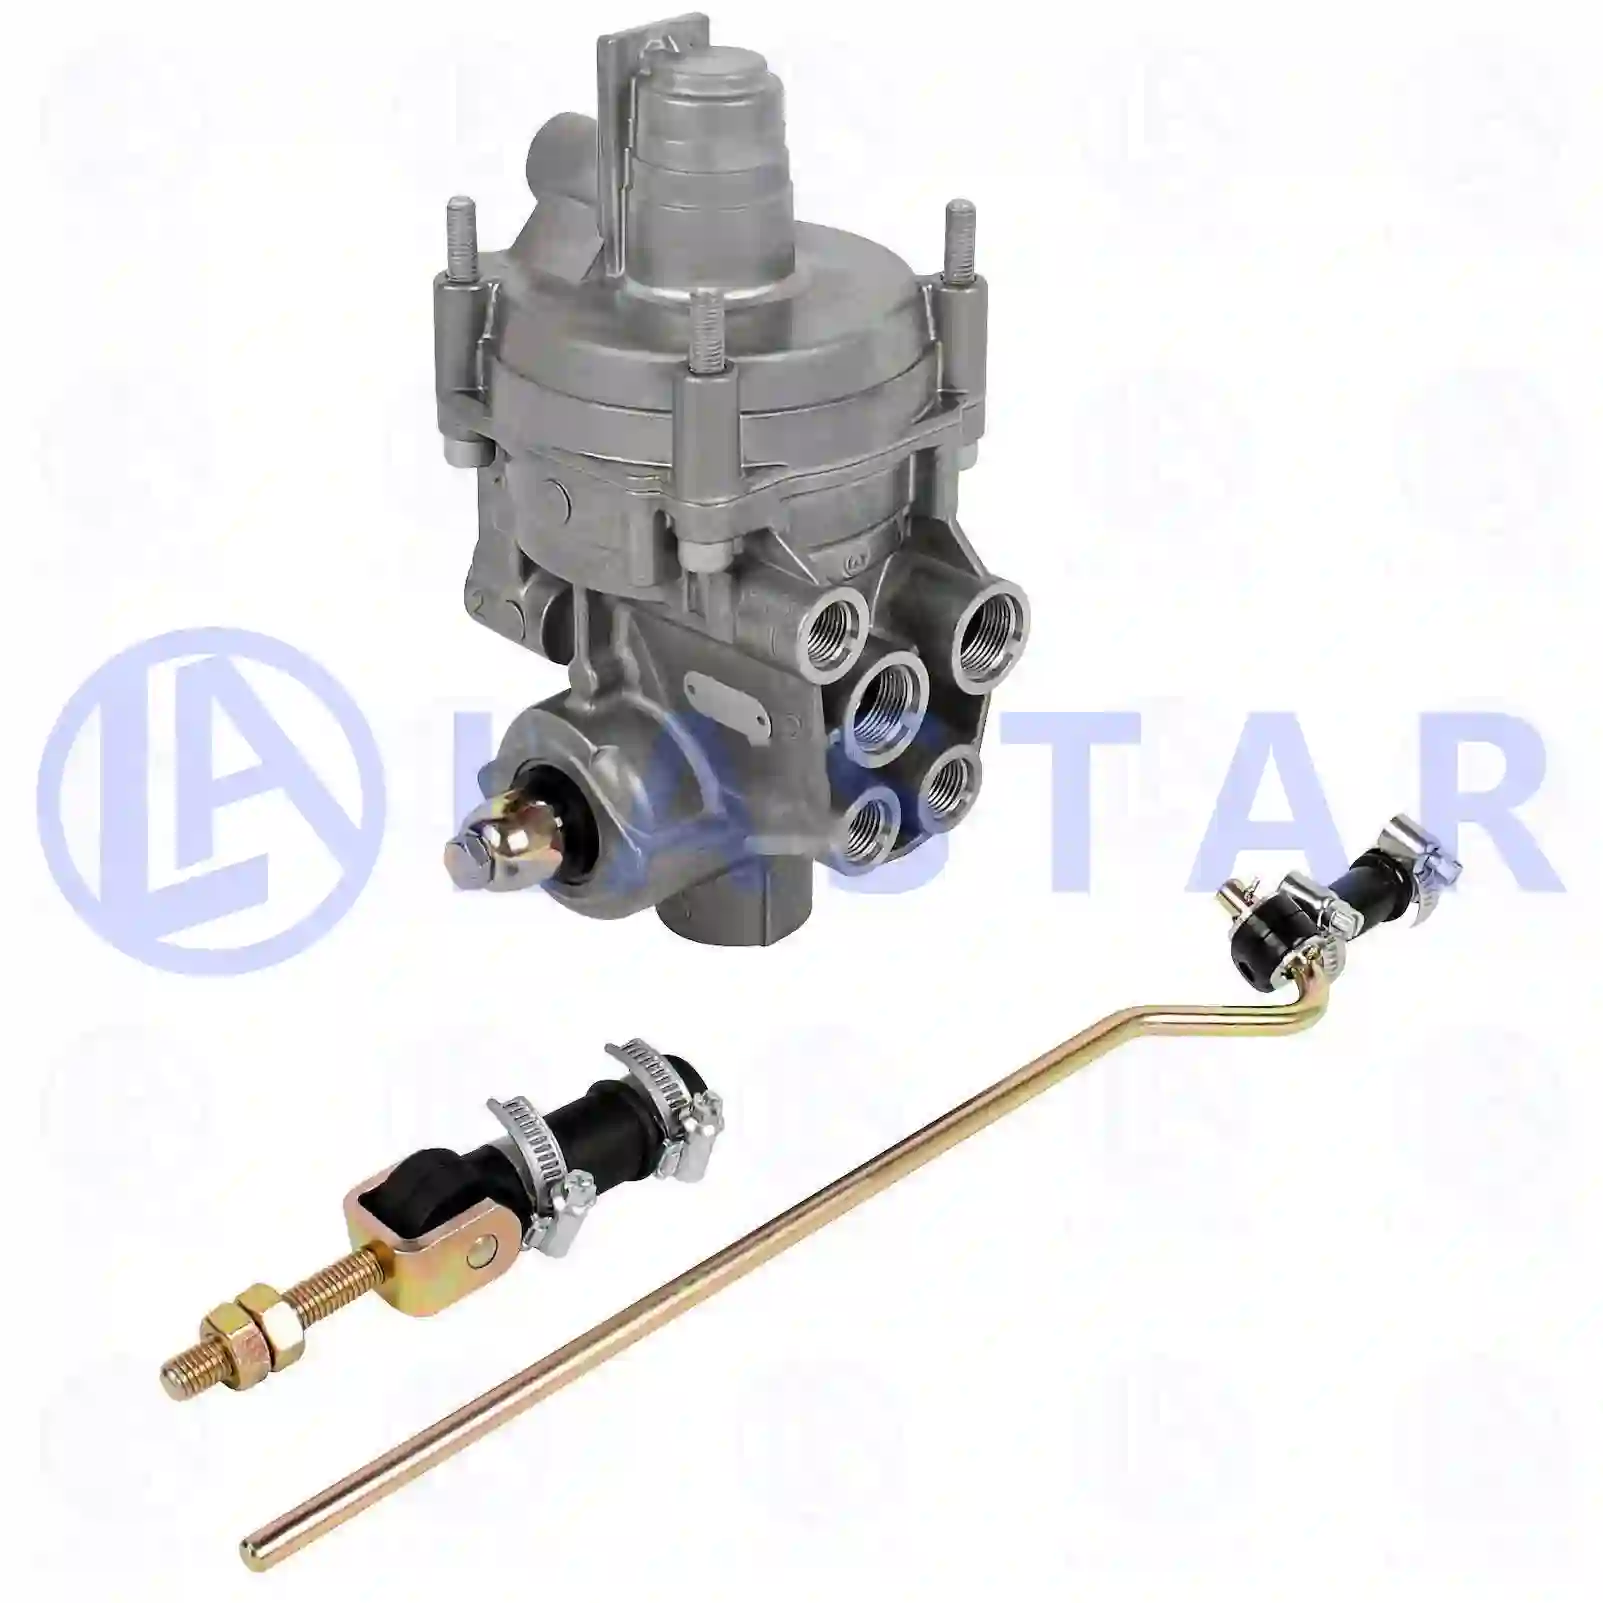 Load sensitive valve, 77714894, 1325324, 1325324R, 1506665, BBU8129, AJA0918001, AJA09181, CF350908AJA09181, 500003984, 2090056, ZG50522-0008 ||  77714894 Lastar Spare Part | Truck Spare Parts, Auotomotive Spare Parts Load sensitive valve, 77714894, 1325324, 1325324R, 1506665, BBU8129, AJA0918001, AJA09181, CF350908AJA09181, 500003984, 2090056, ZG50522-0008 ||  77714894 Lastar Spare Part | Truck Spare Parts, Auotomotive Spare Parts